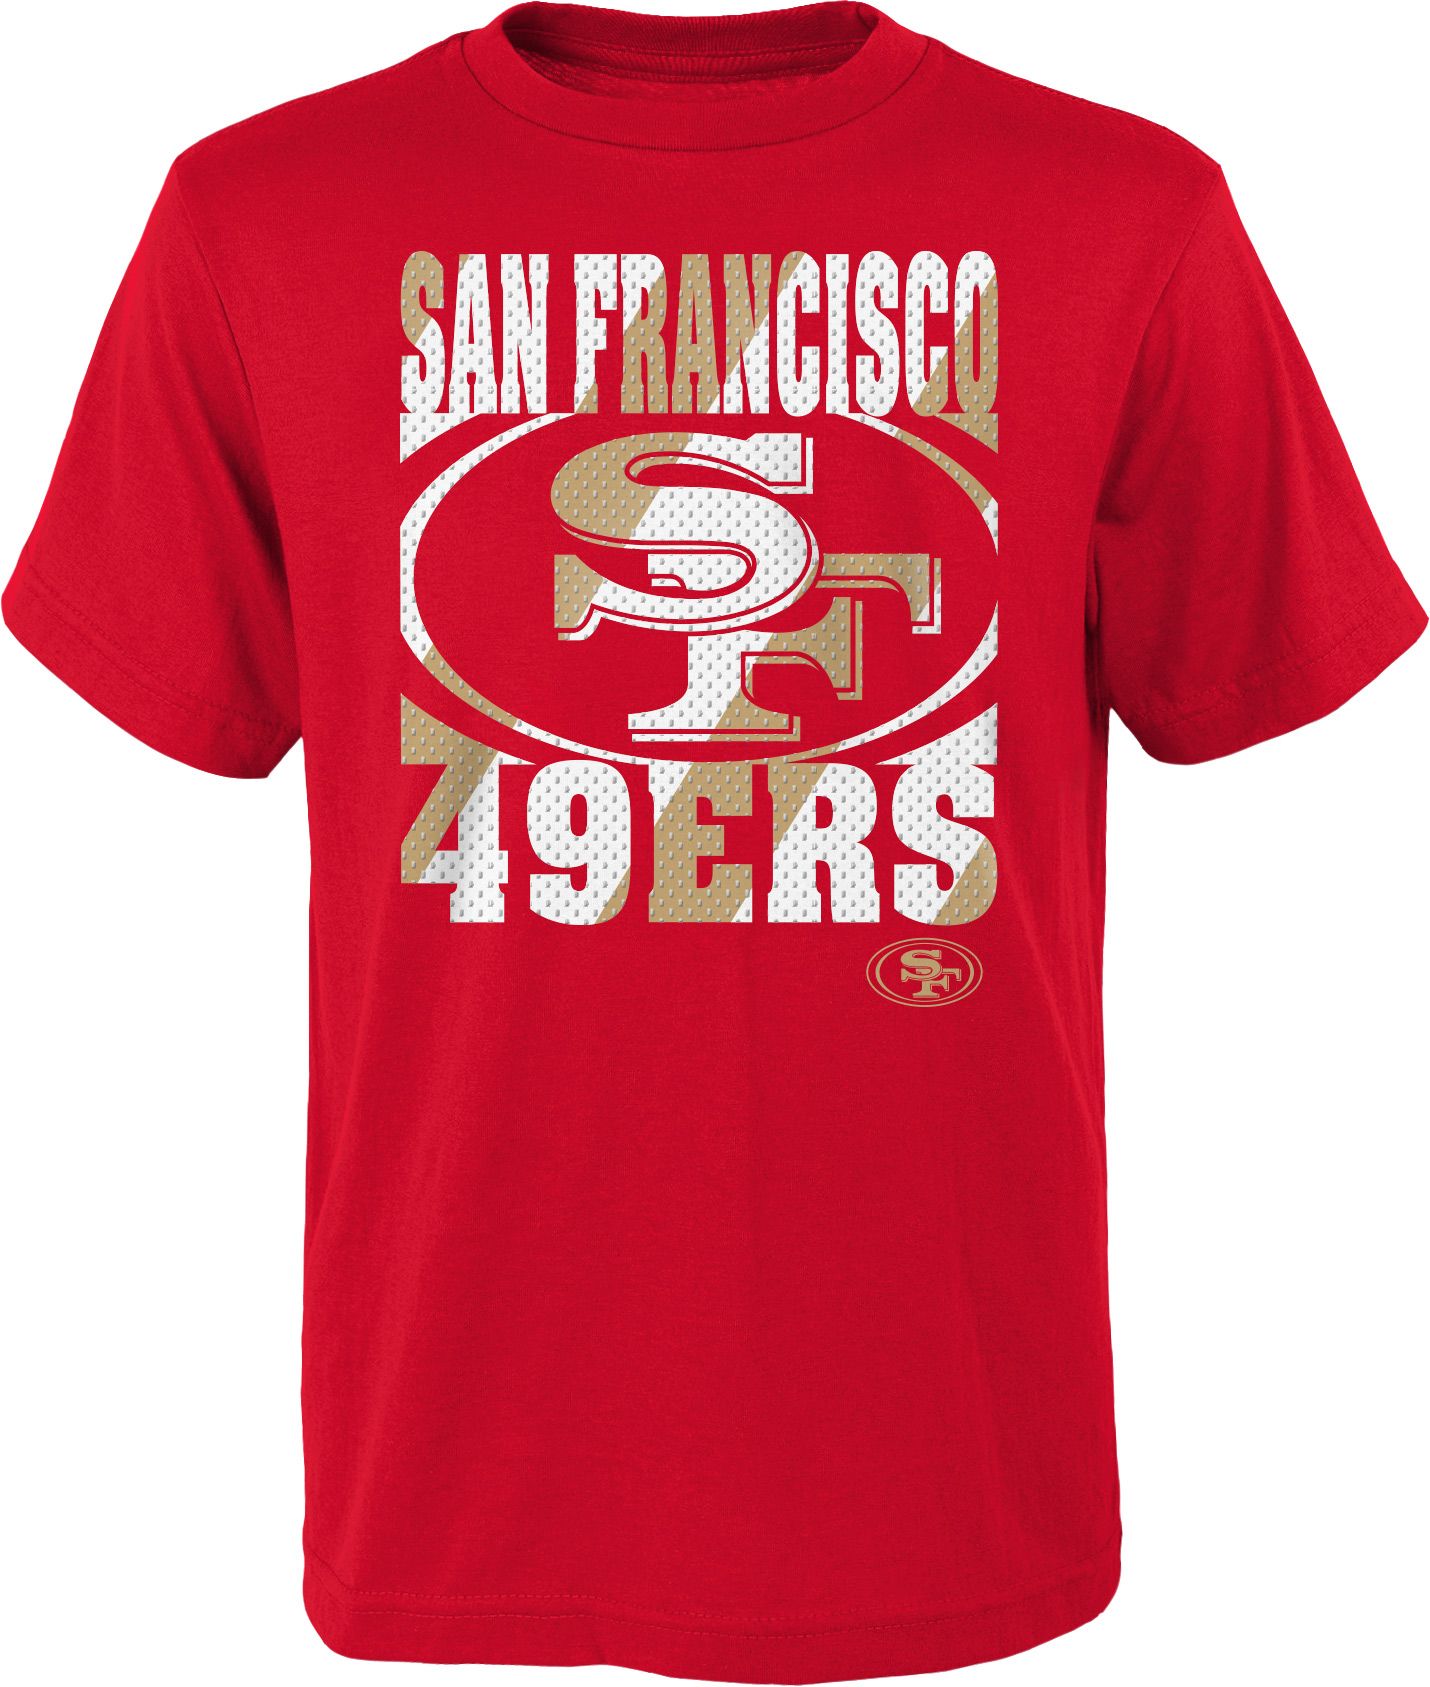 San Francisco 49ers Kids' Apparel | NFL Fan Shop at DICK'S